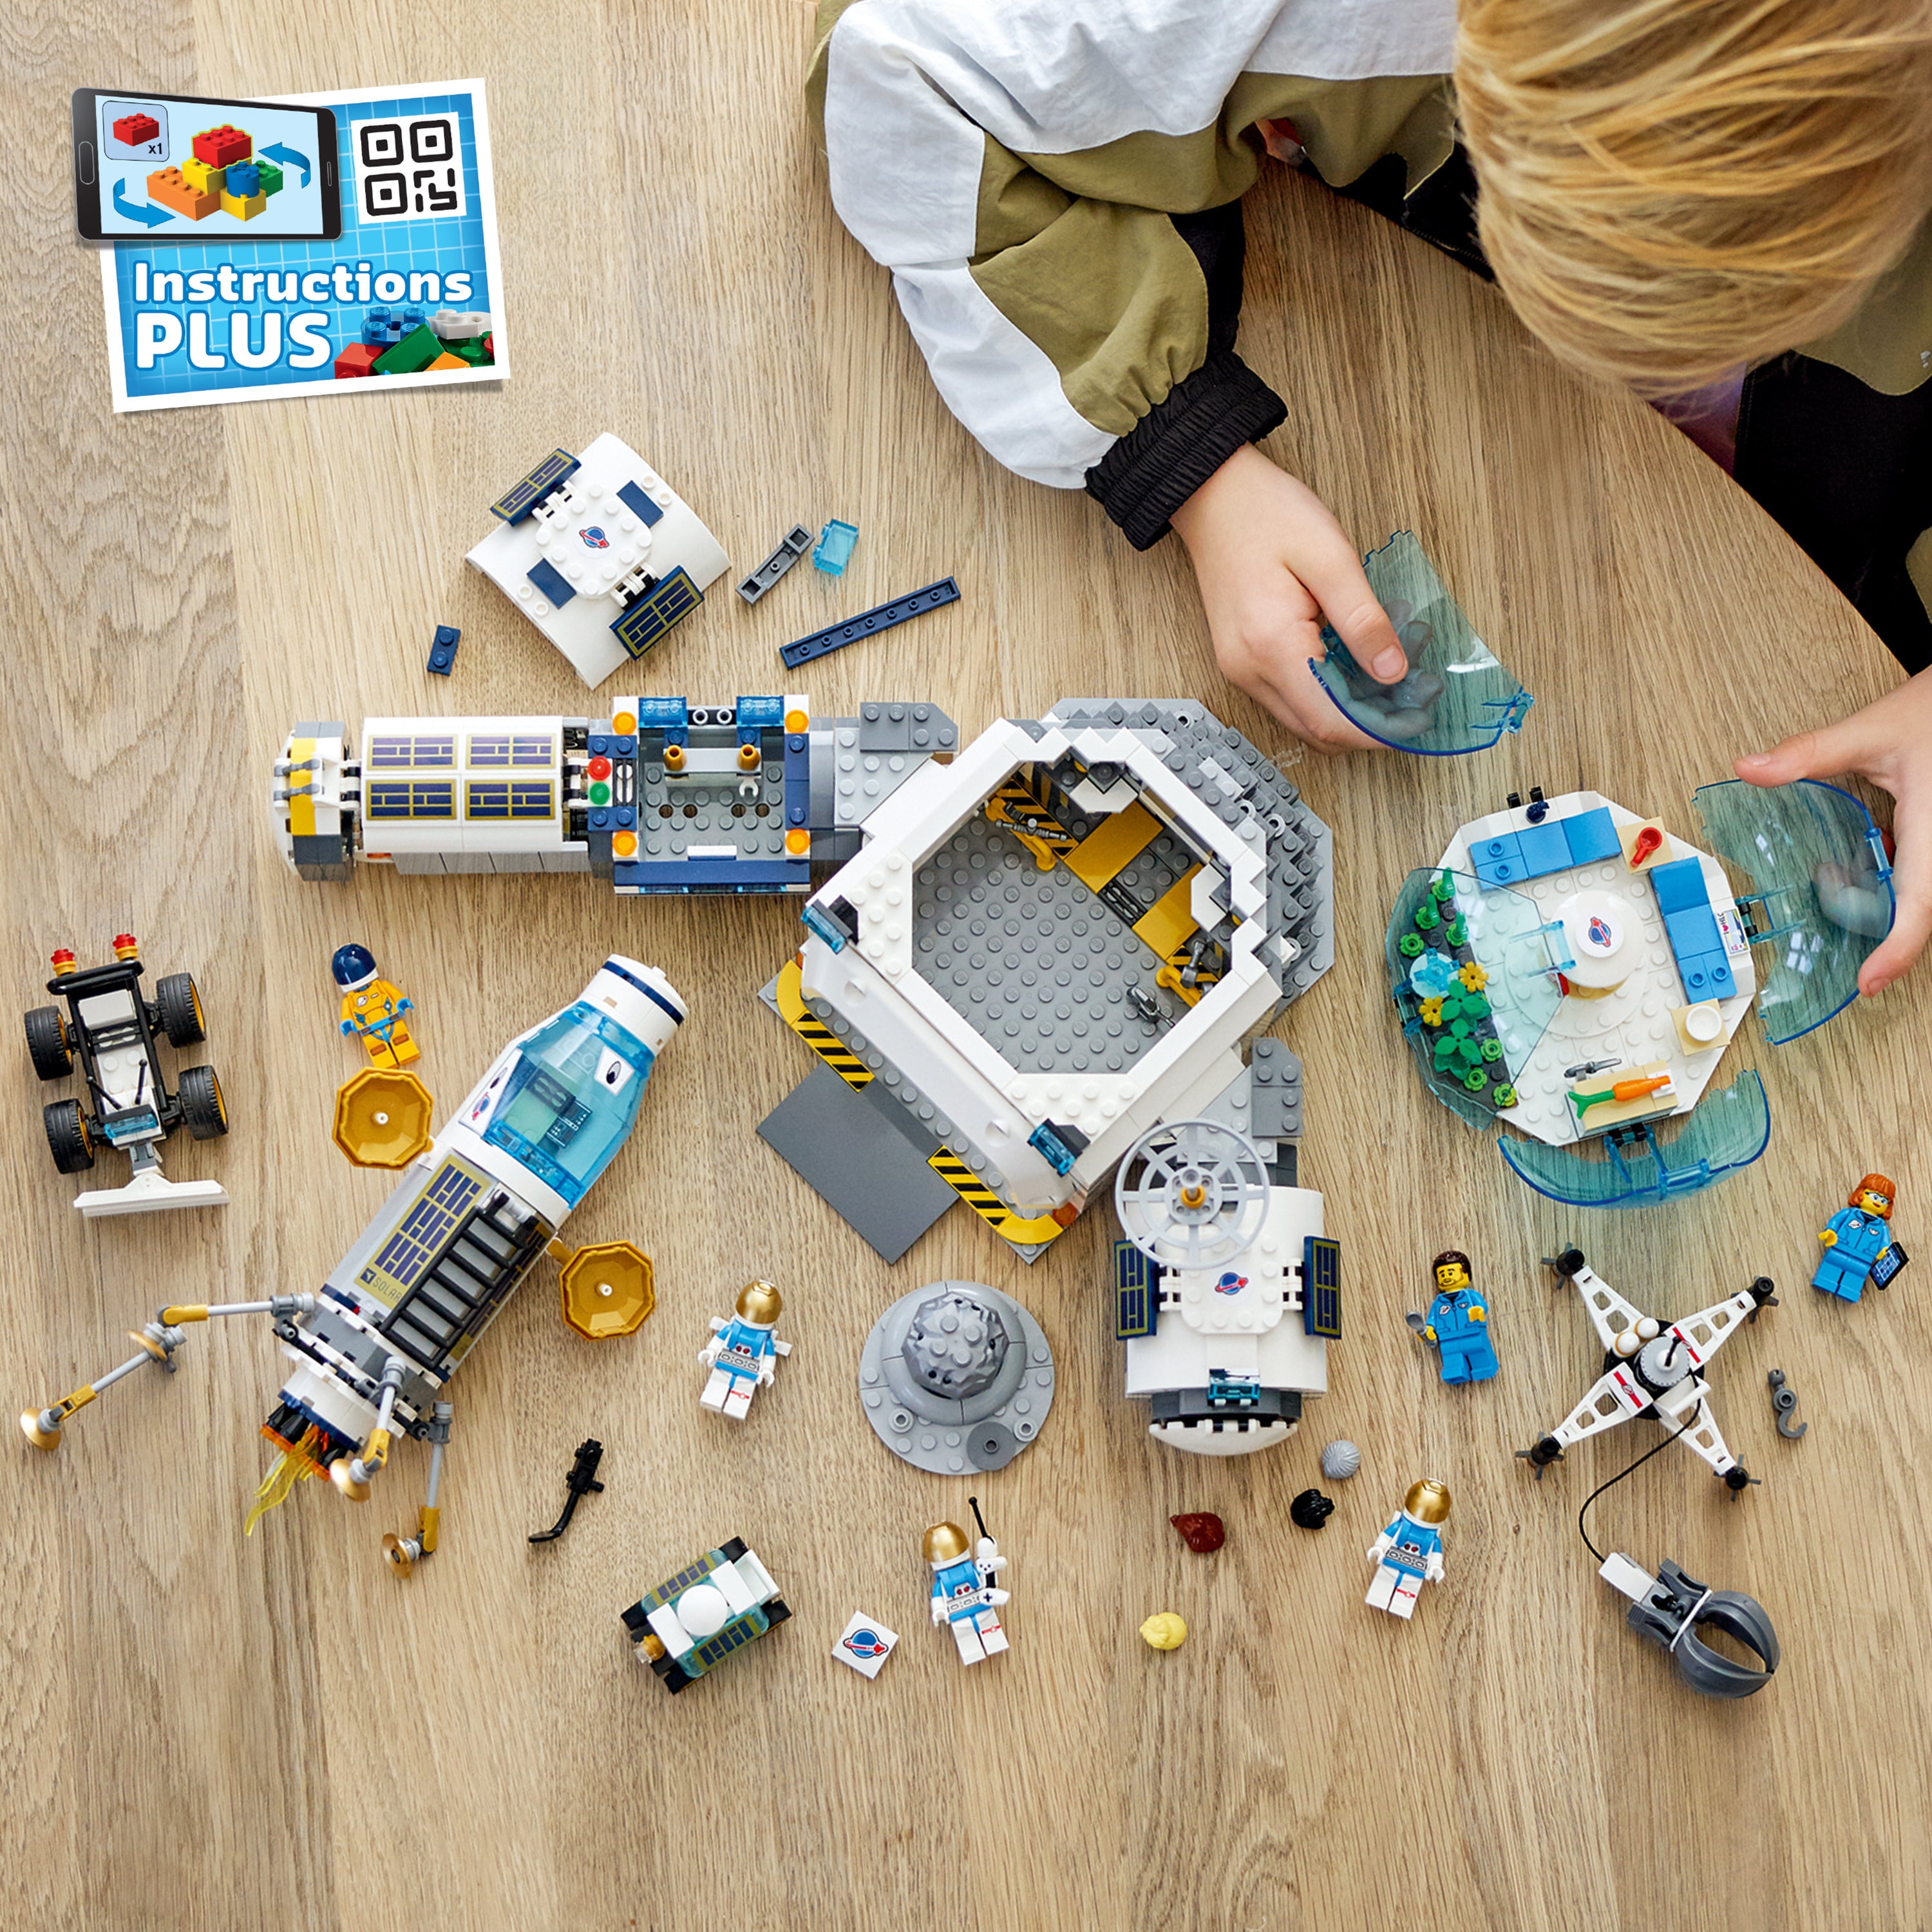 LEGO® City Lunar Space Station– 60350